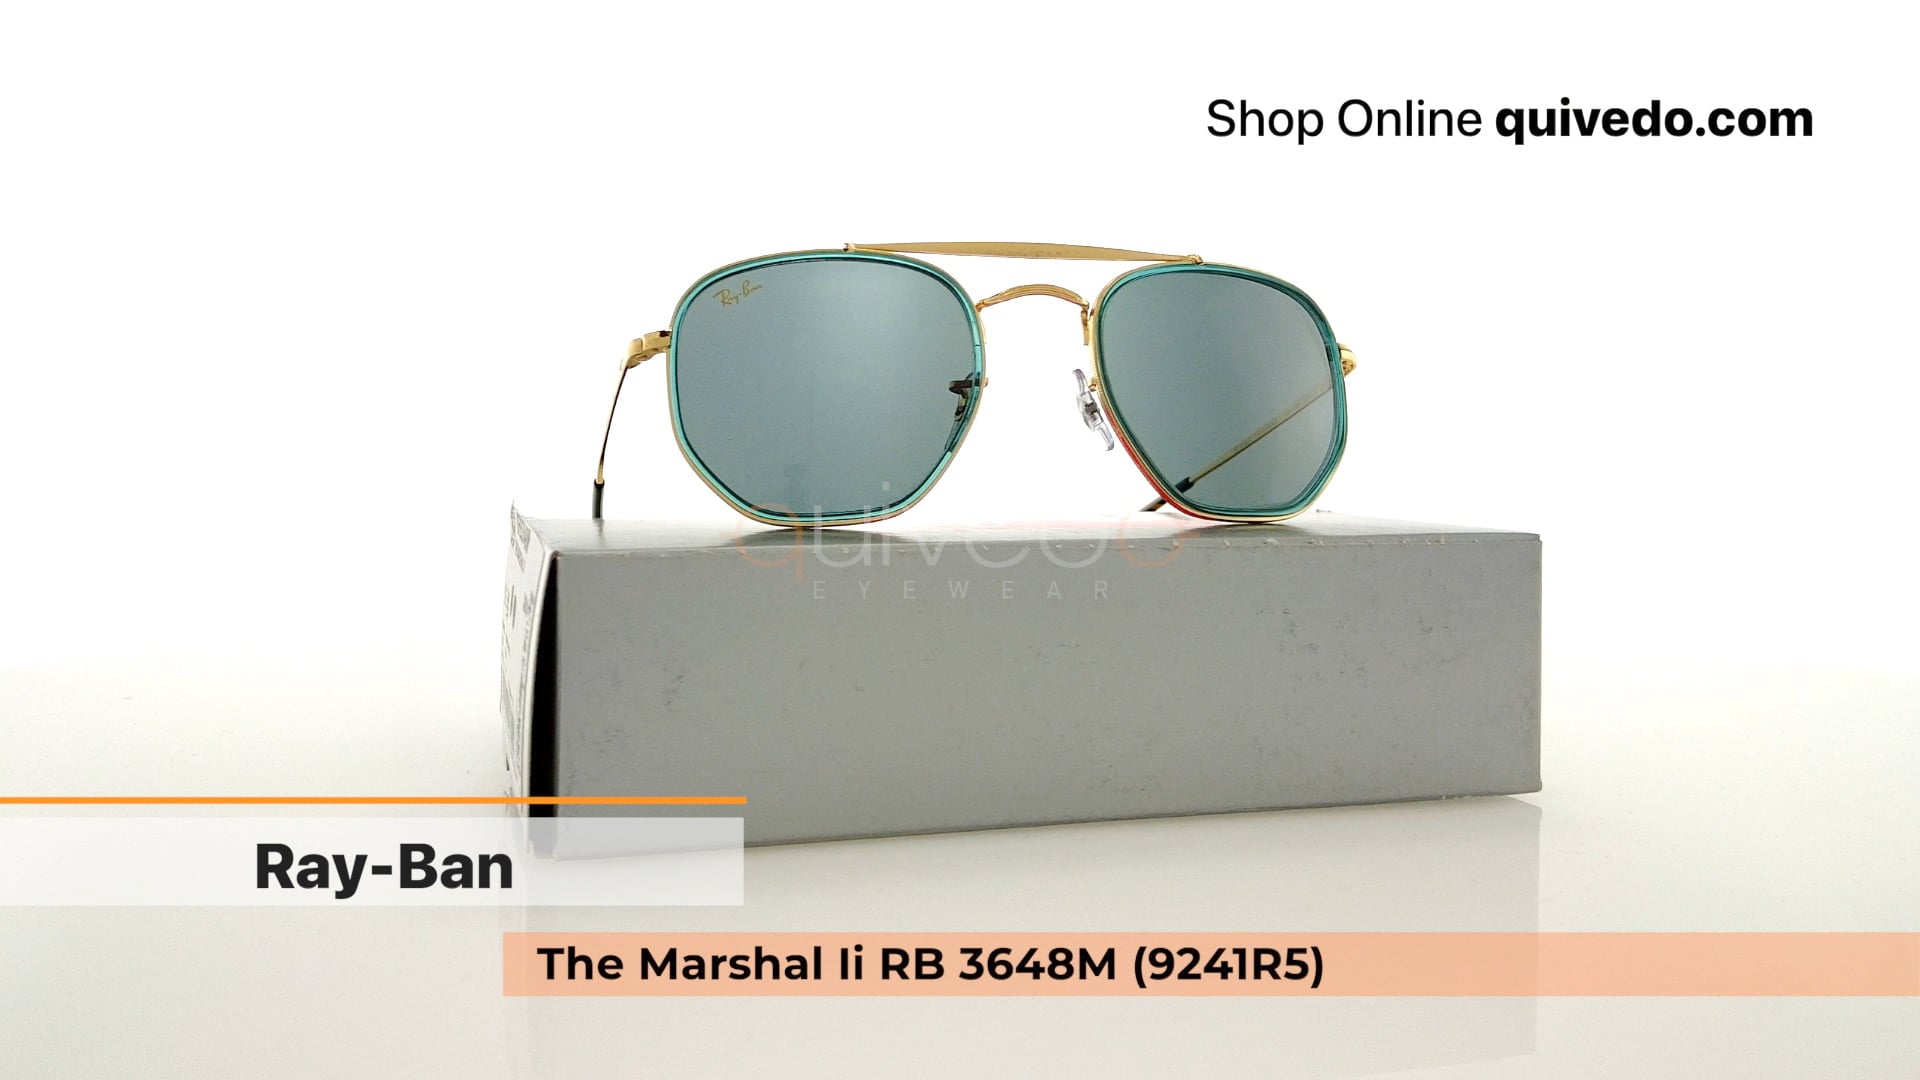 Ray-Ban The Marshal Ii RB 3648M (9241R5)